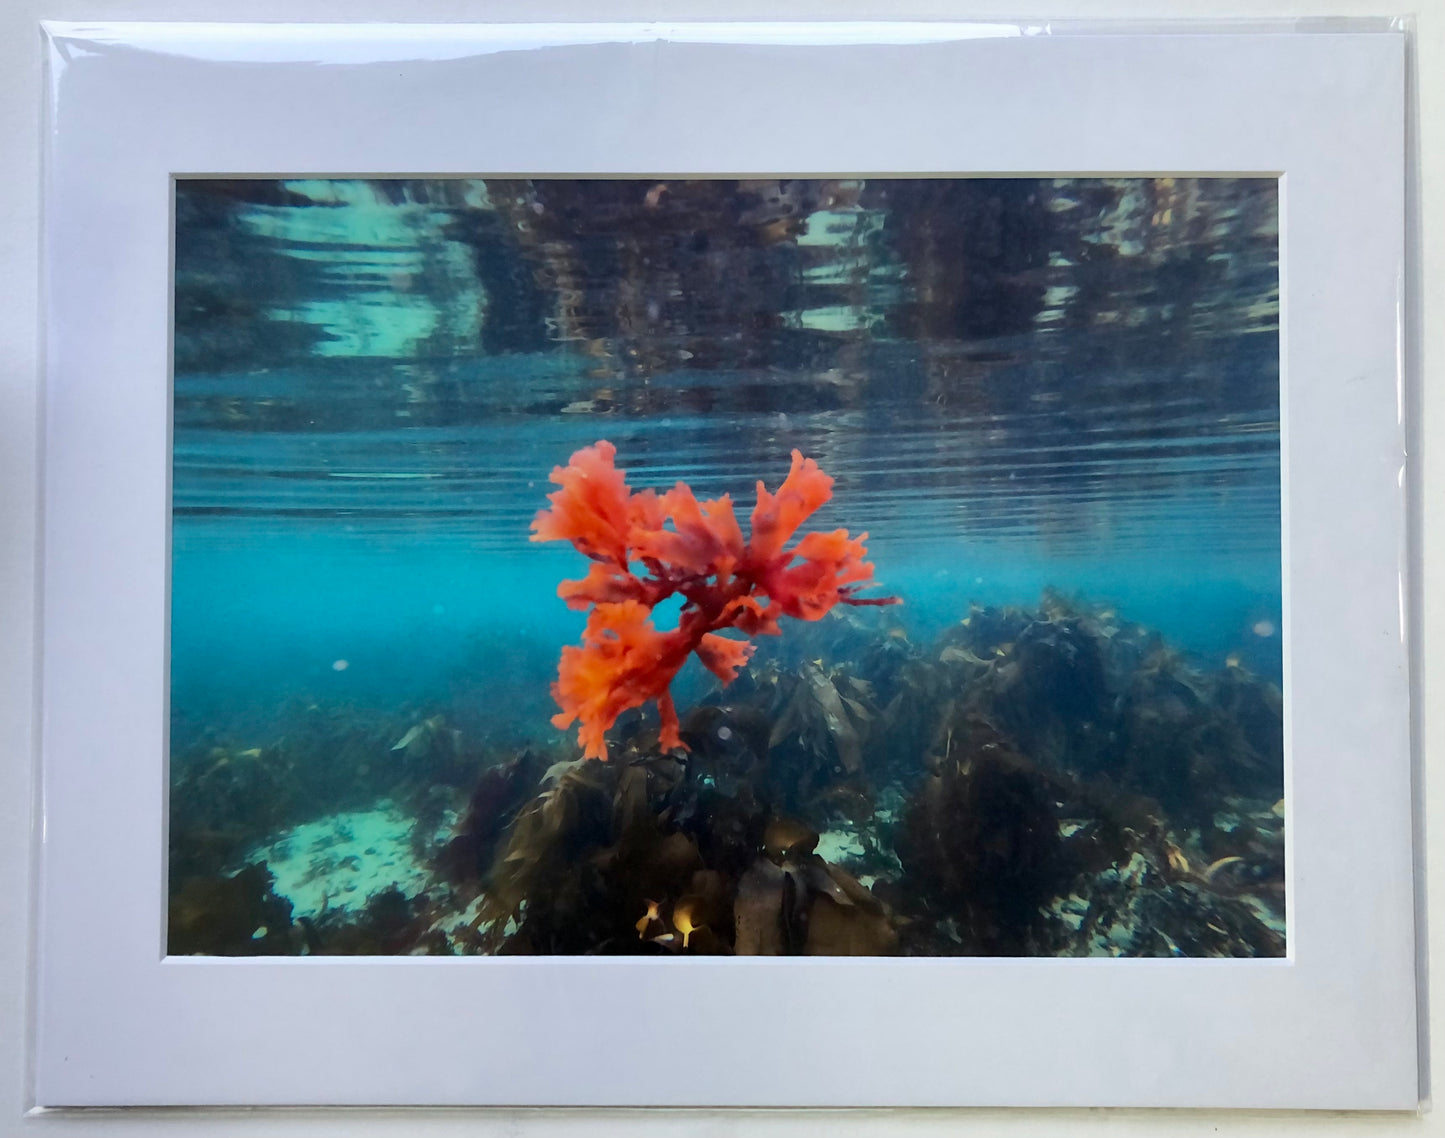 Underwater photo.